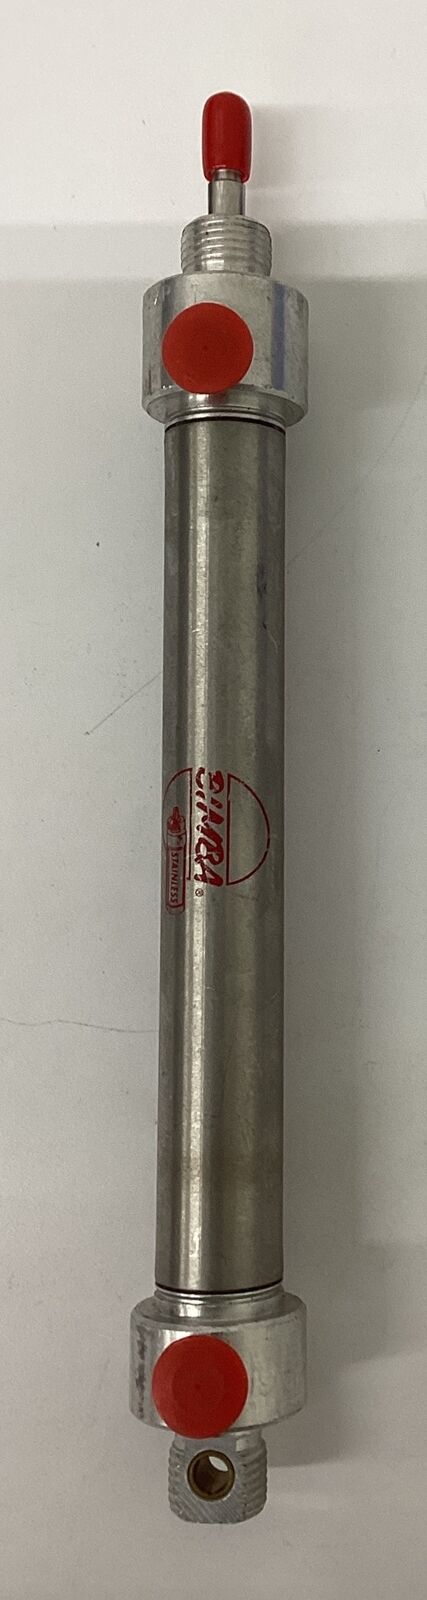 Bimba MRS-044-DXP Pneumatic Cylinder (GR222)